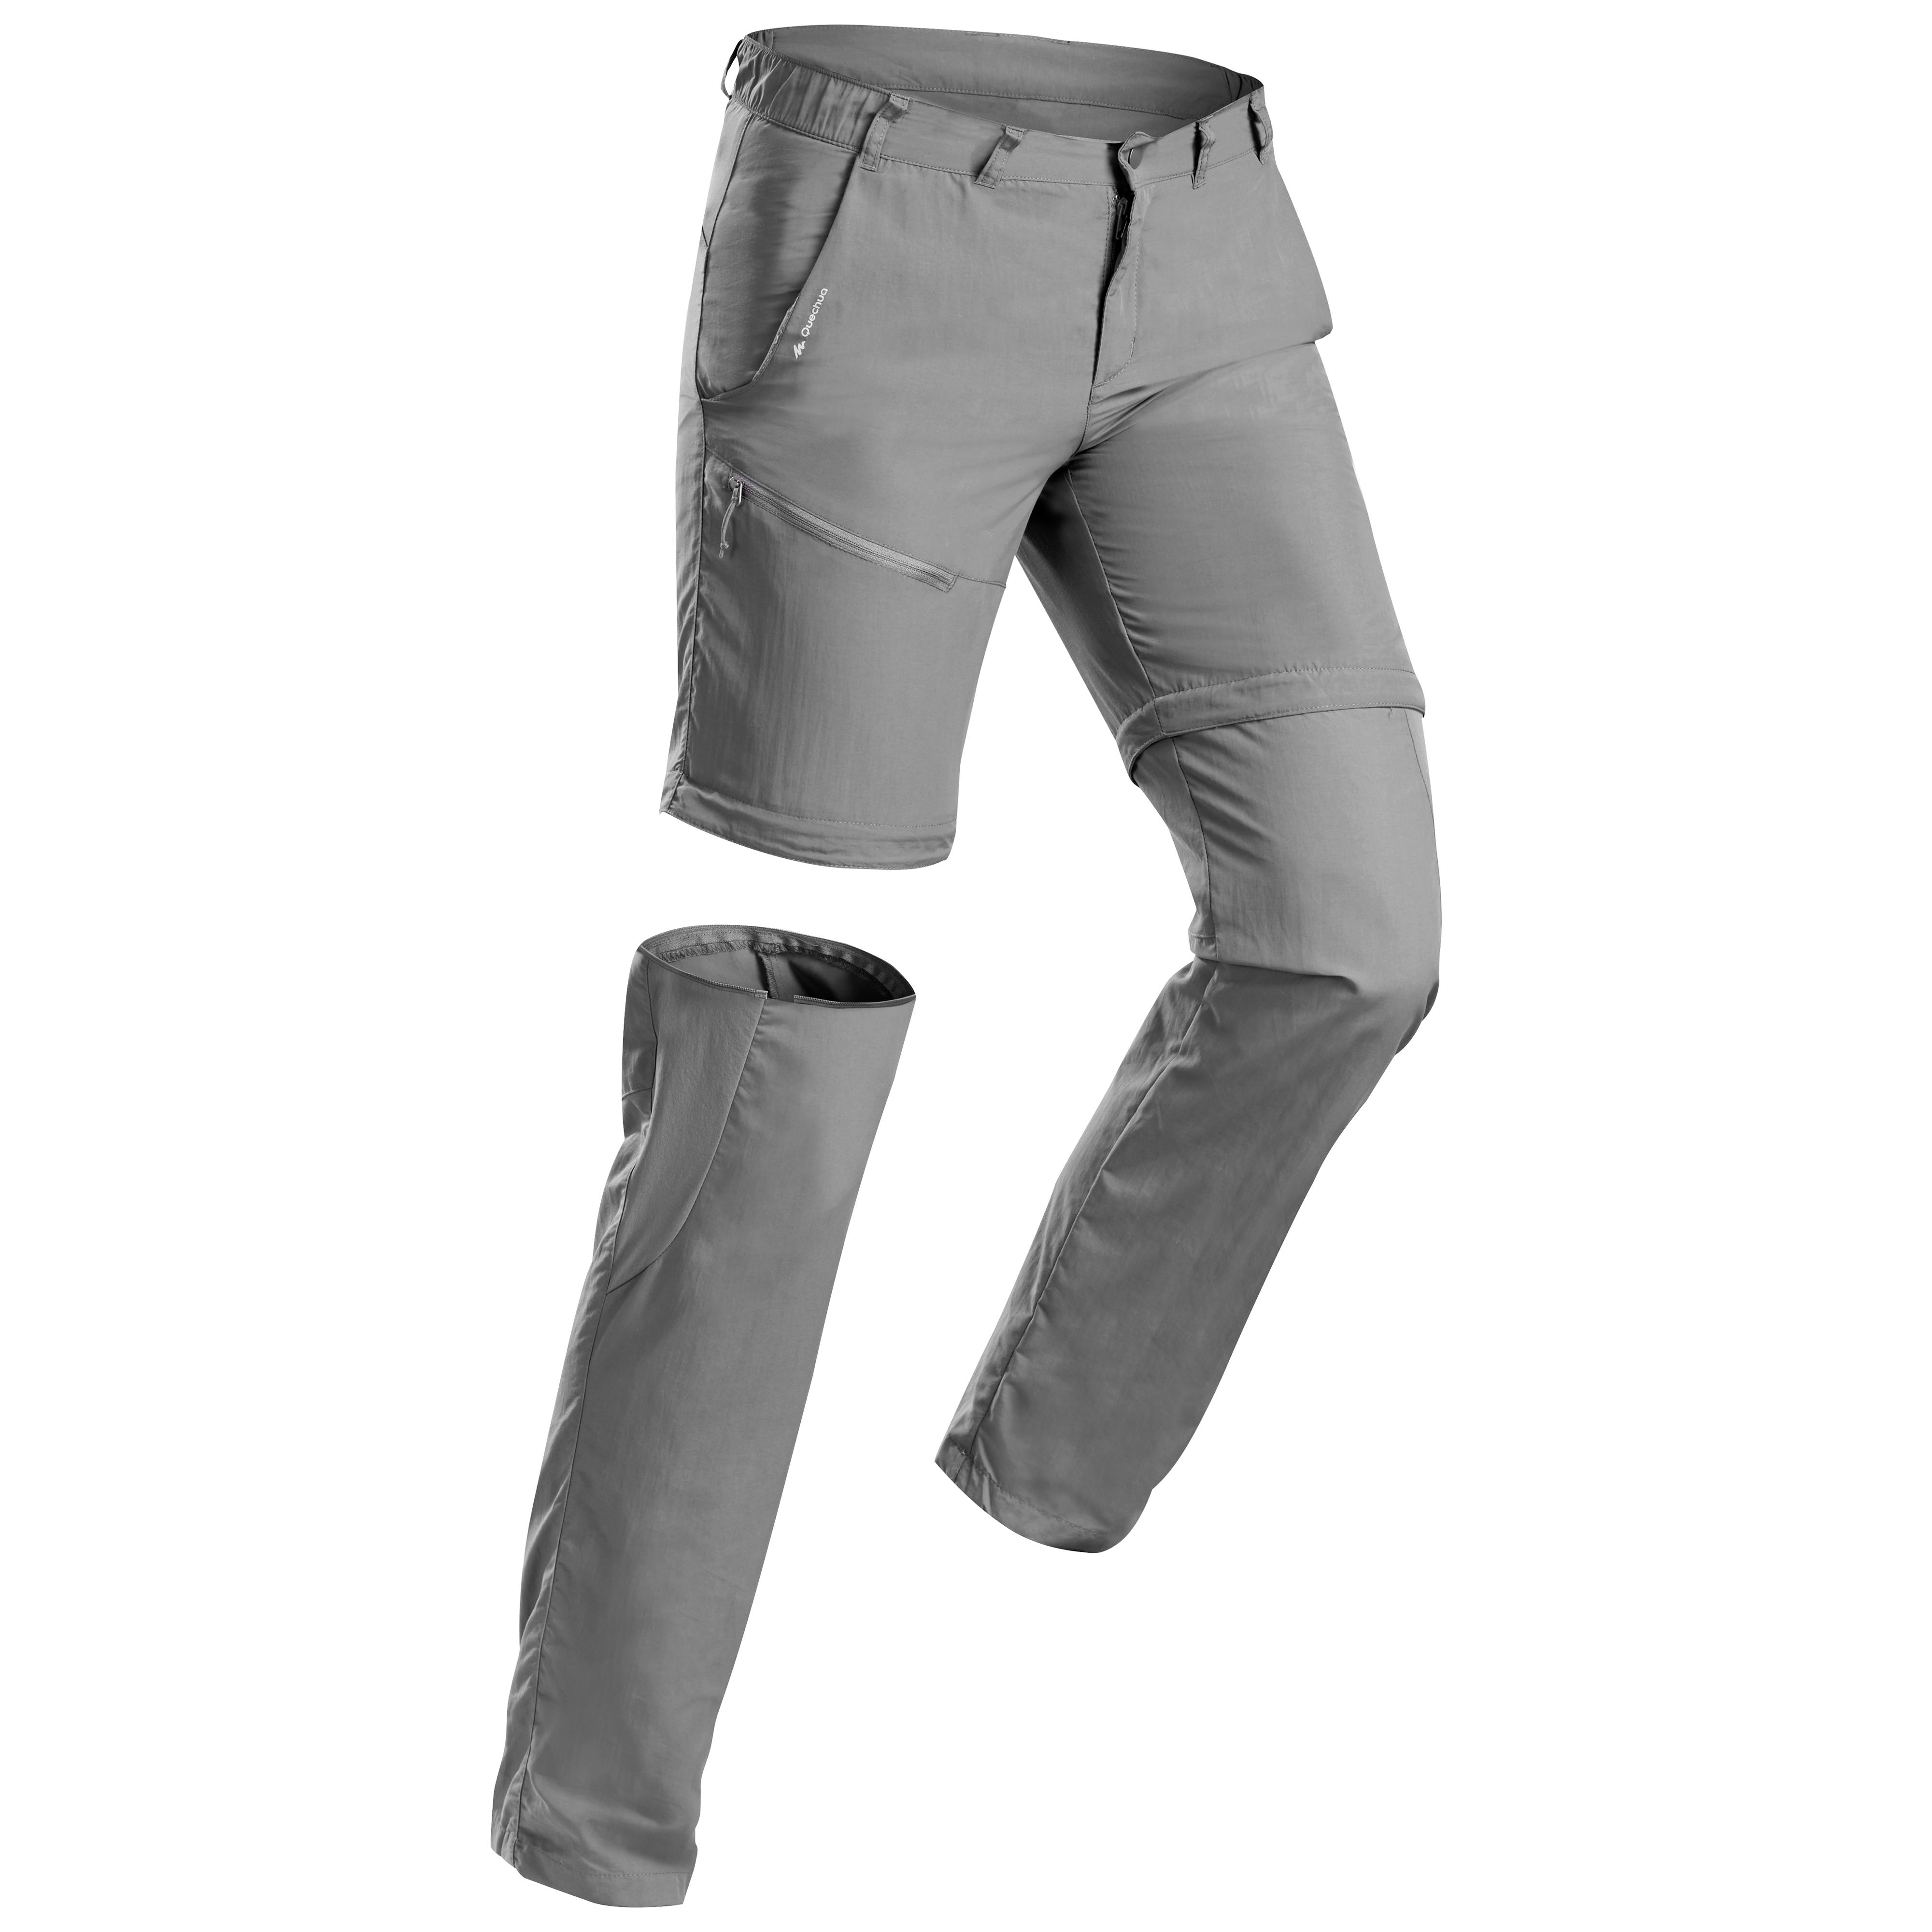 Pantalon Modulabil Drumeție la Munte MH150 gri bărbați La Oferta Online decathlon imagine La Oferta Online